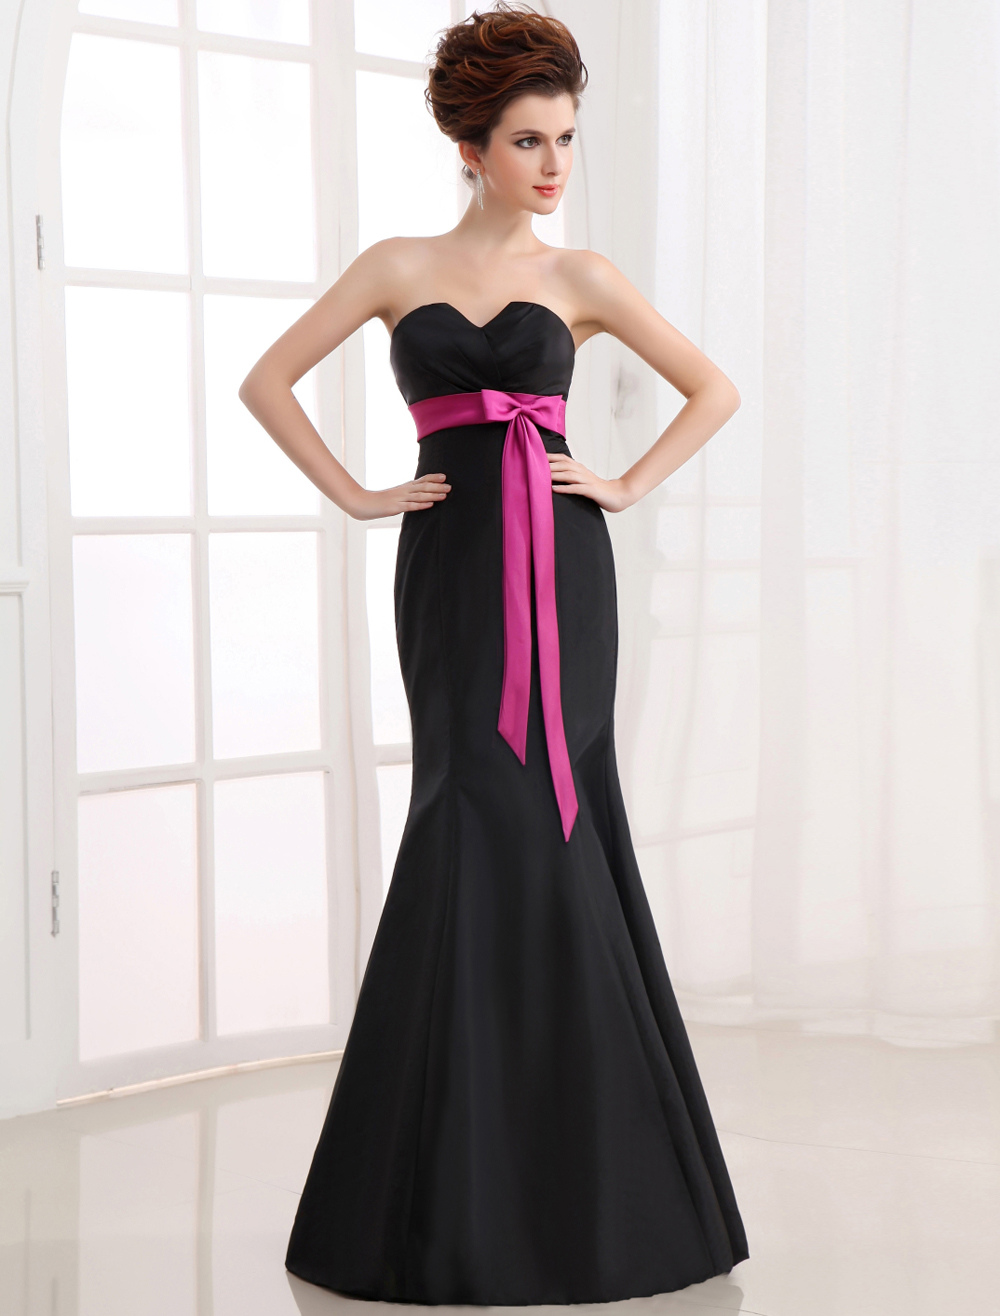 Black Evening Dress Mermaid Strapless Bow Sash Satin Dress (Wedding Cheap Party Dress) photo